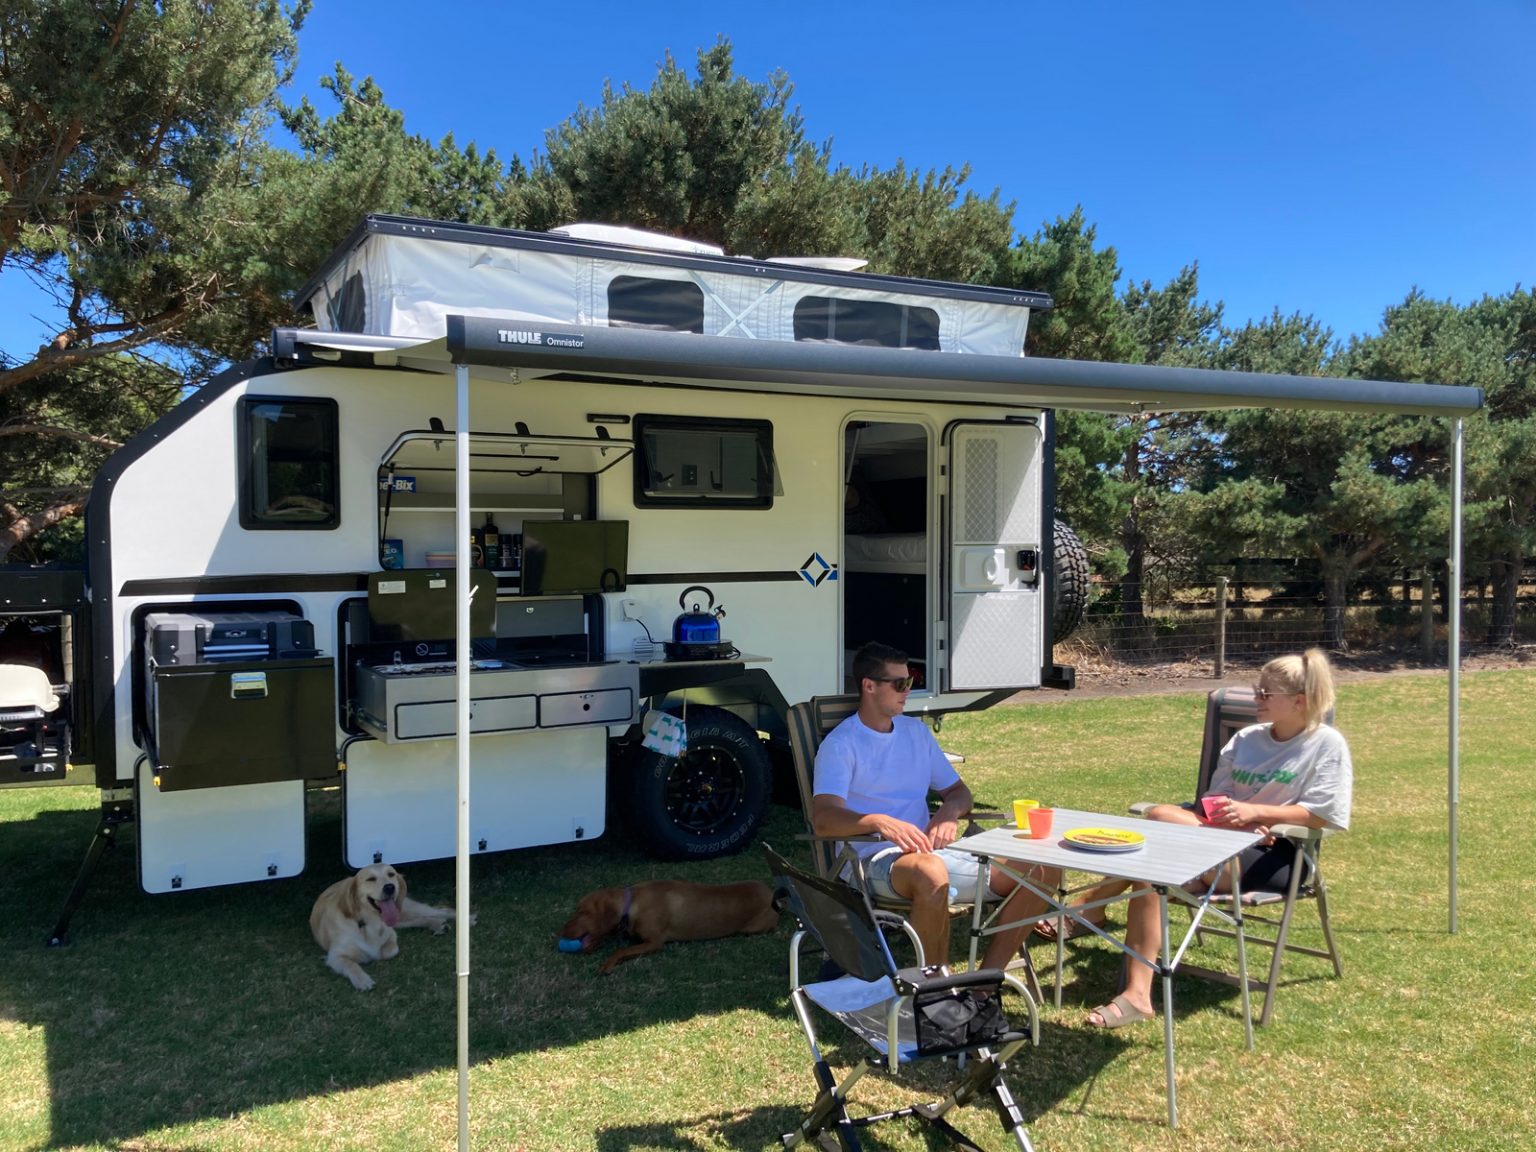 Exploring the Advantages of Lightweight Caravans in Australia